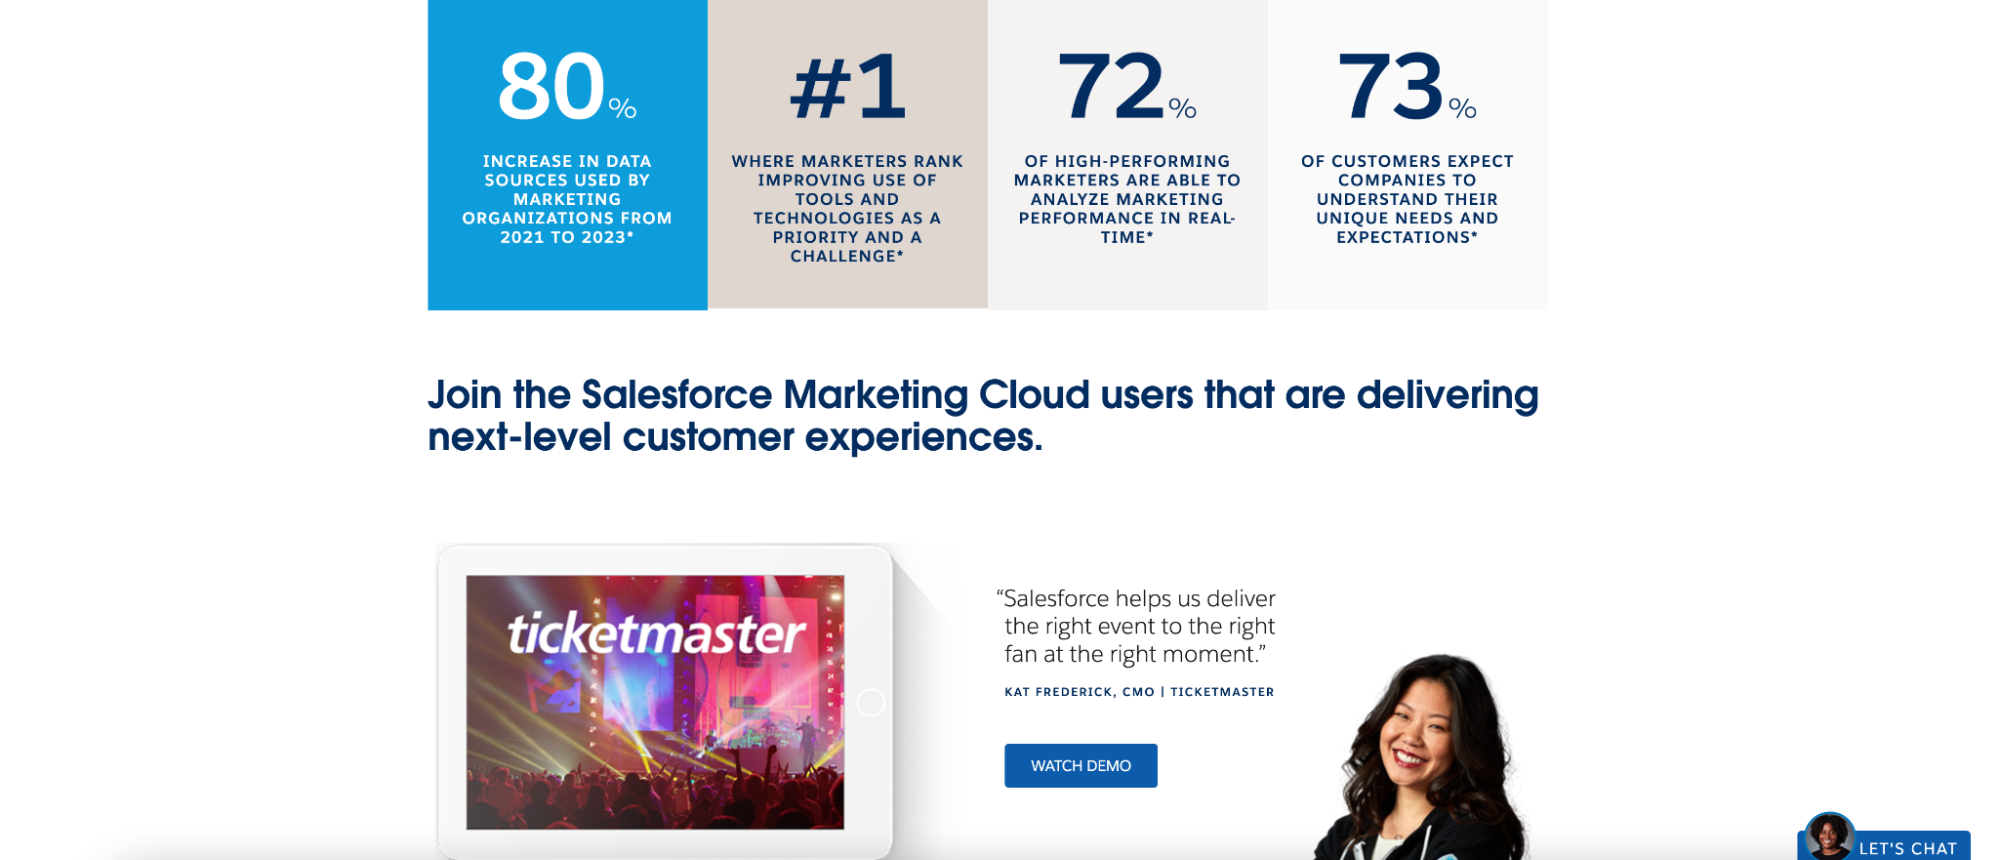 Questa immagine mostra un esempio di pagina di destinazione di Salesforce.